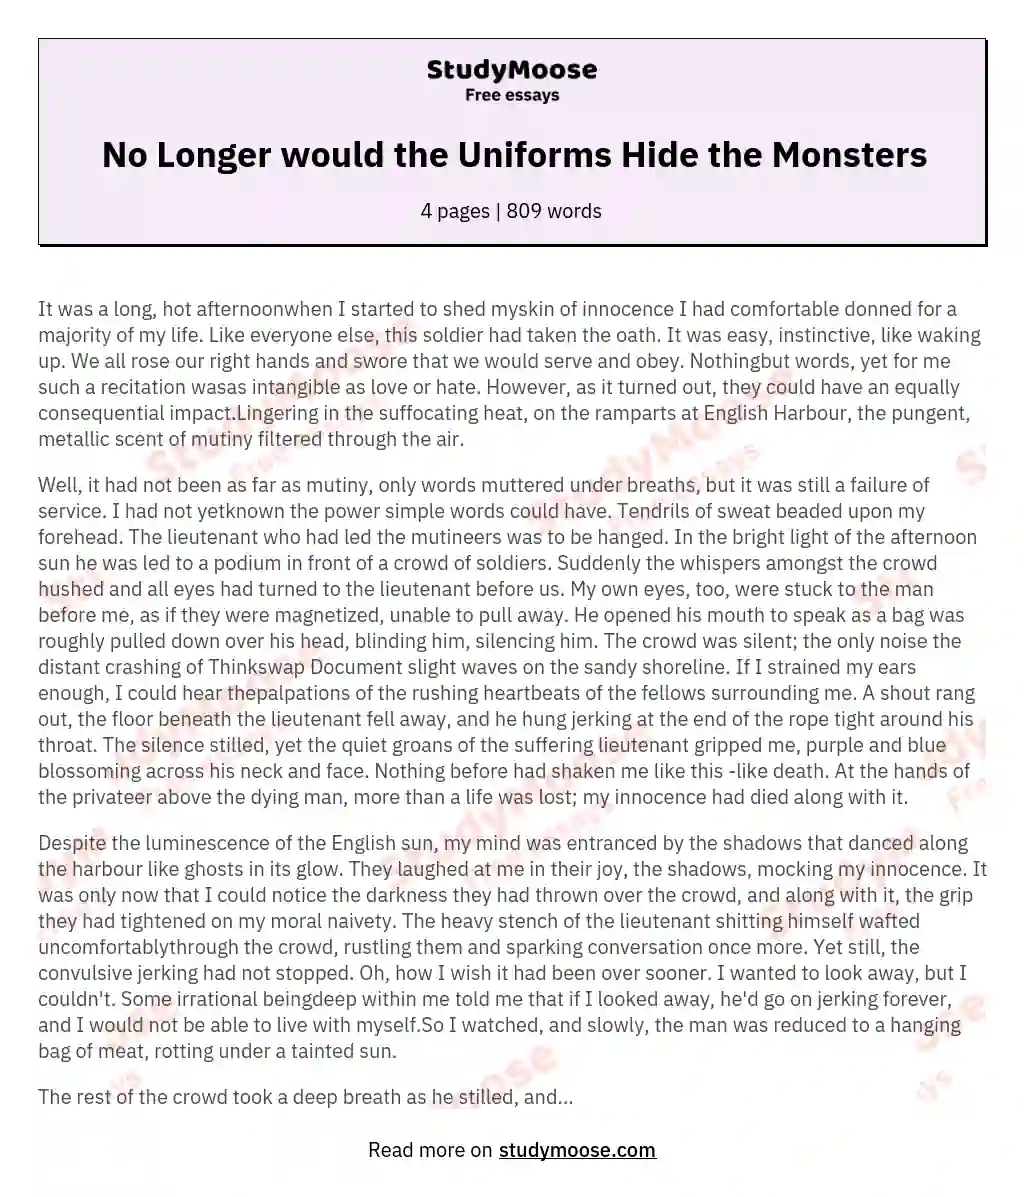 No Longer would the Uniforms Hide the Monsters essay